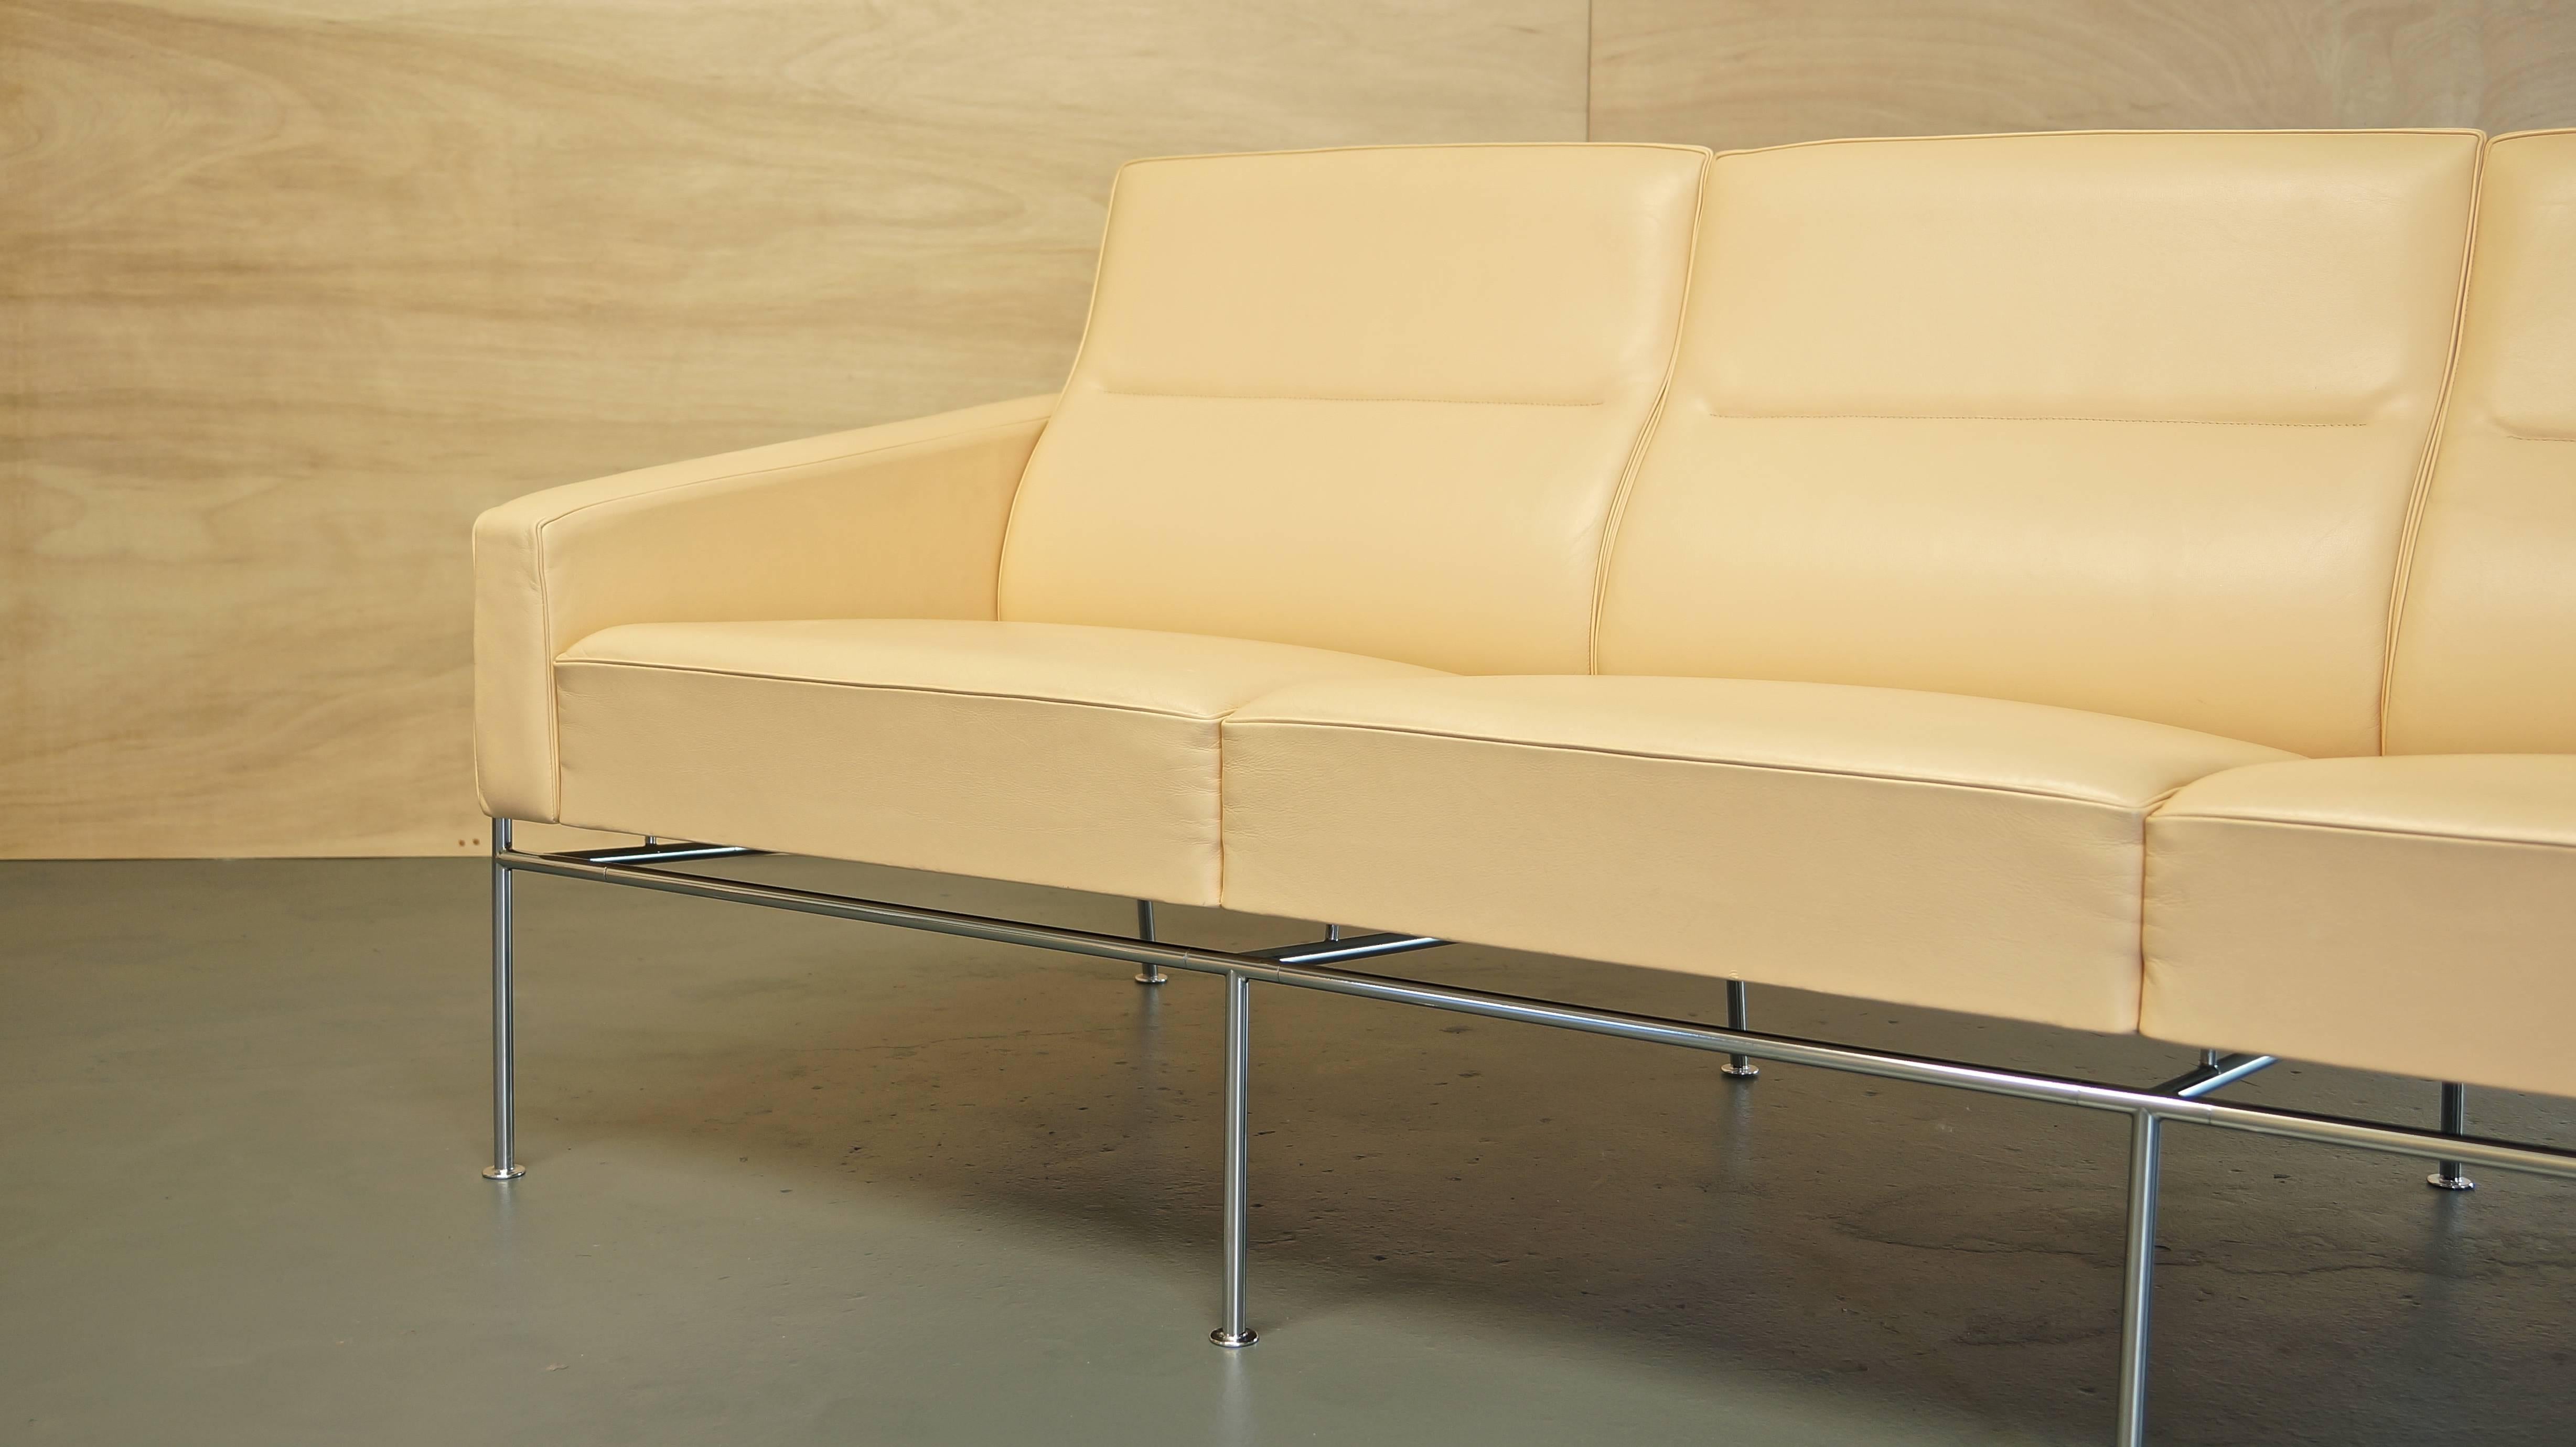 Arne Jacobsen series 3303 sofa in natural premium leather. 

Design: Arne Jacobsen. 
Manufactured in Denmark by Fritz Hansen. 

Chair dimensions - Height 72 cm/depth 79 cm/width 73 cm. 

Sofa dimension - Height 72 cm/depth 79 cm/width 182 cm.